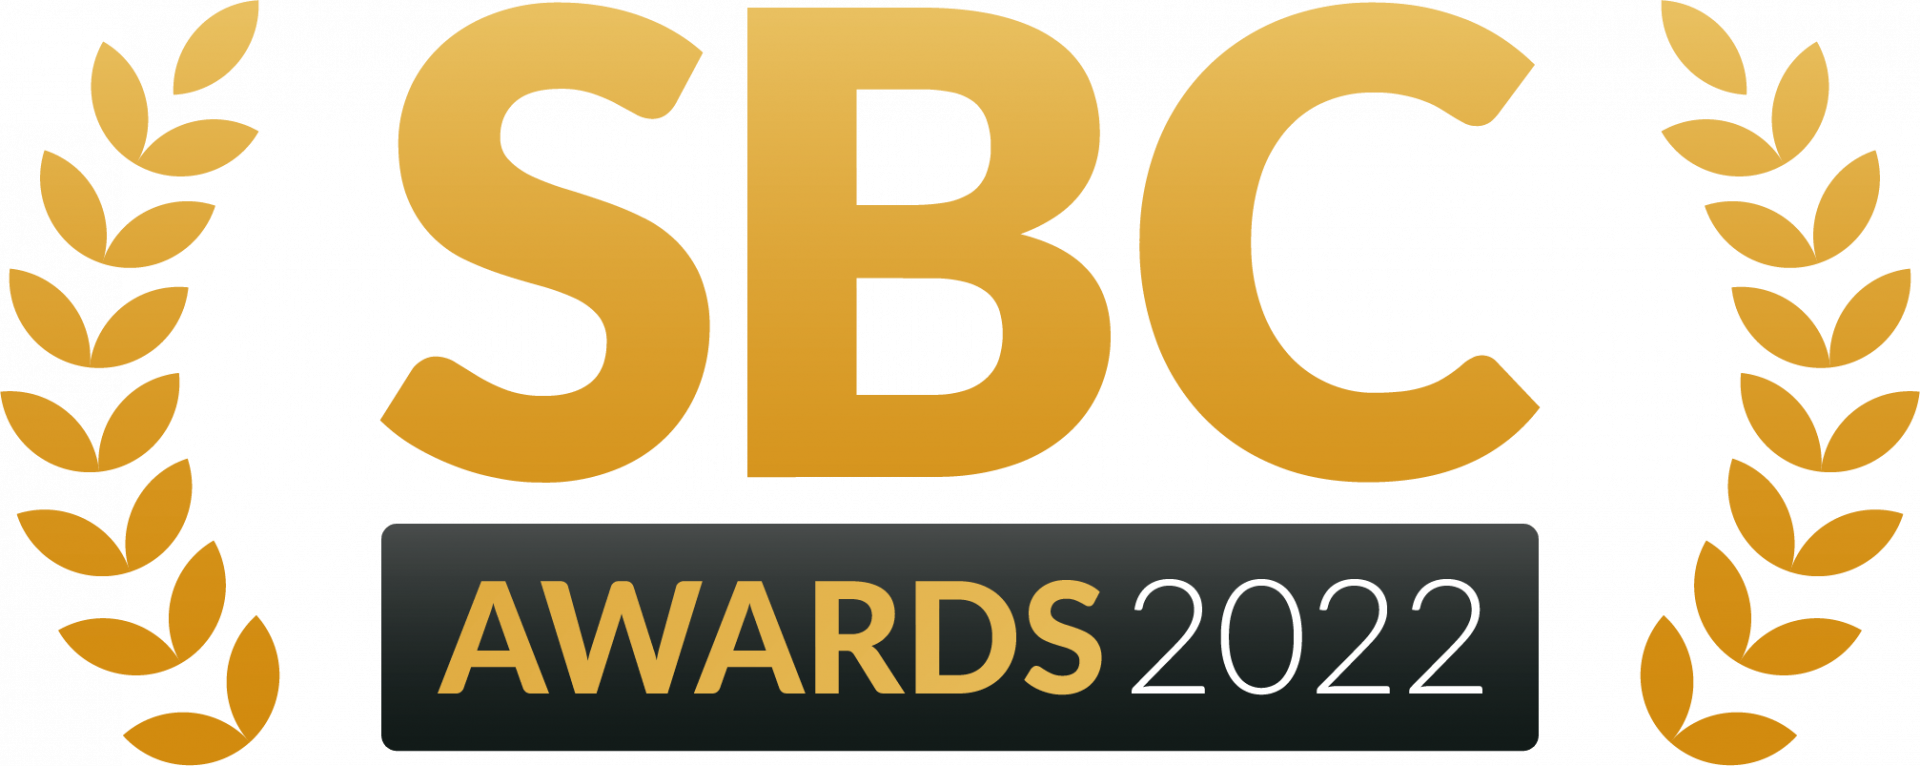 SBC Awards 2022